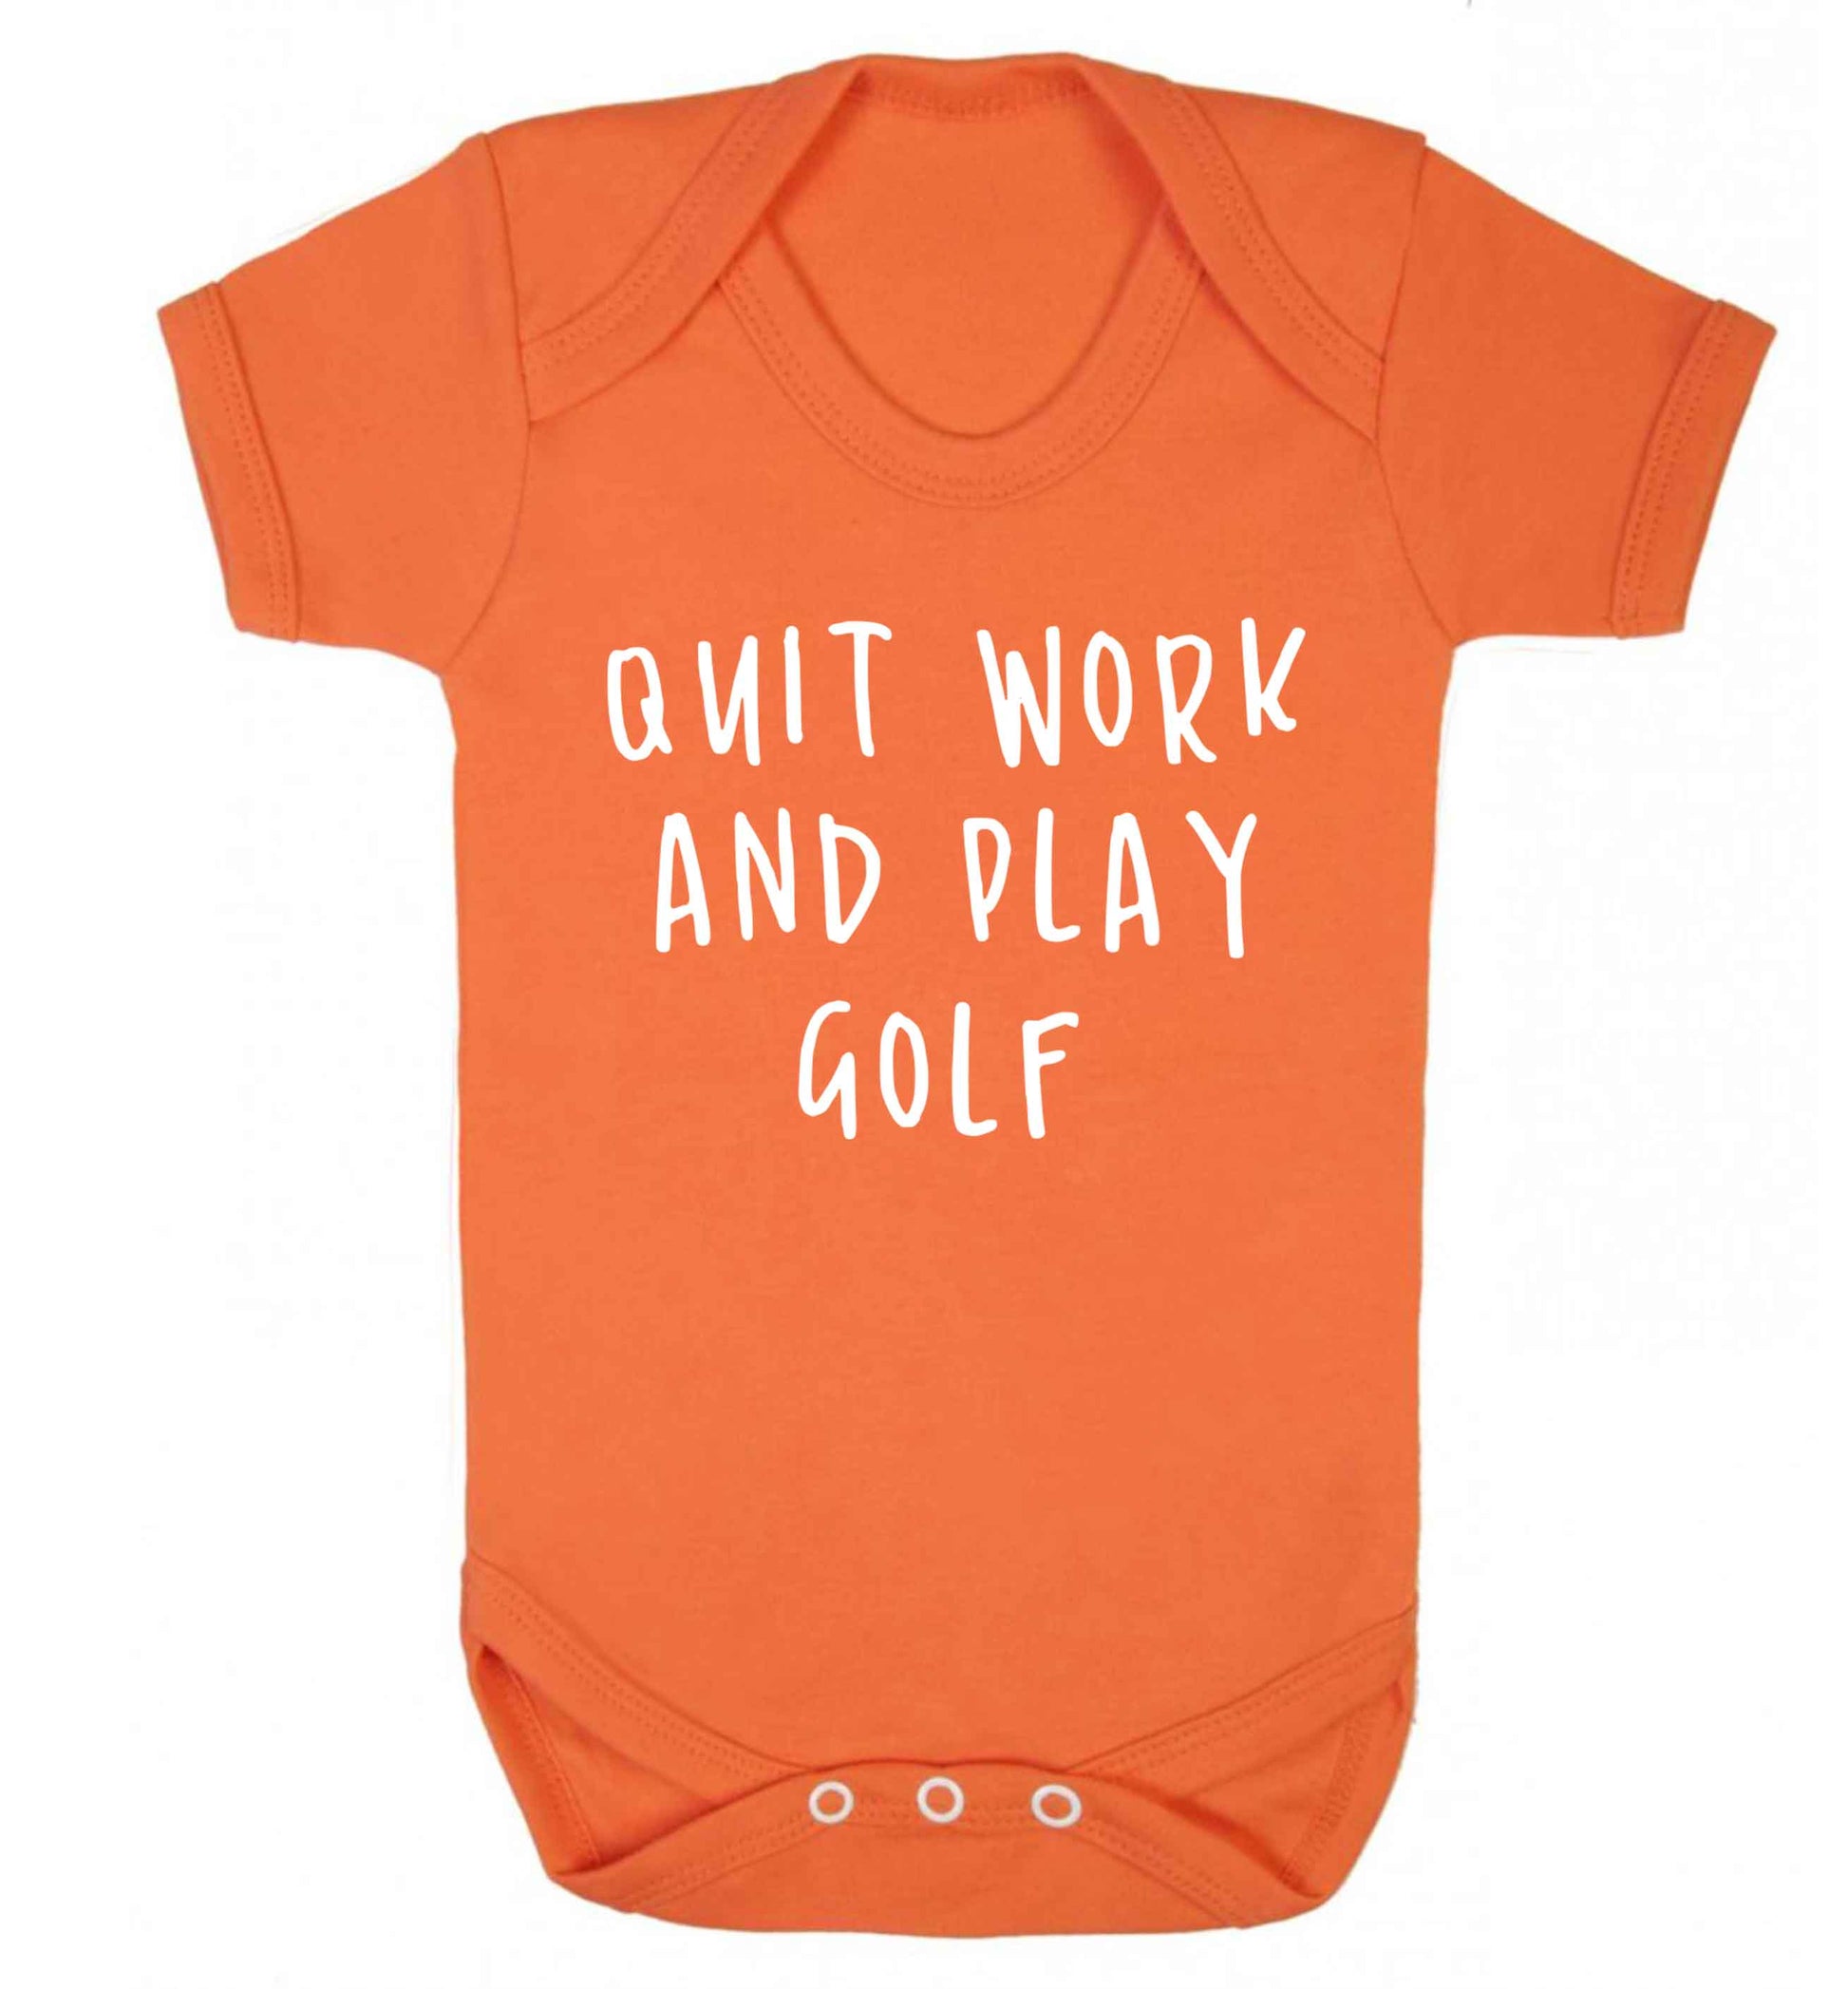 Quit work and play golf Baby Vest orange 18-24 months